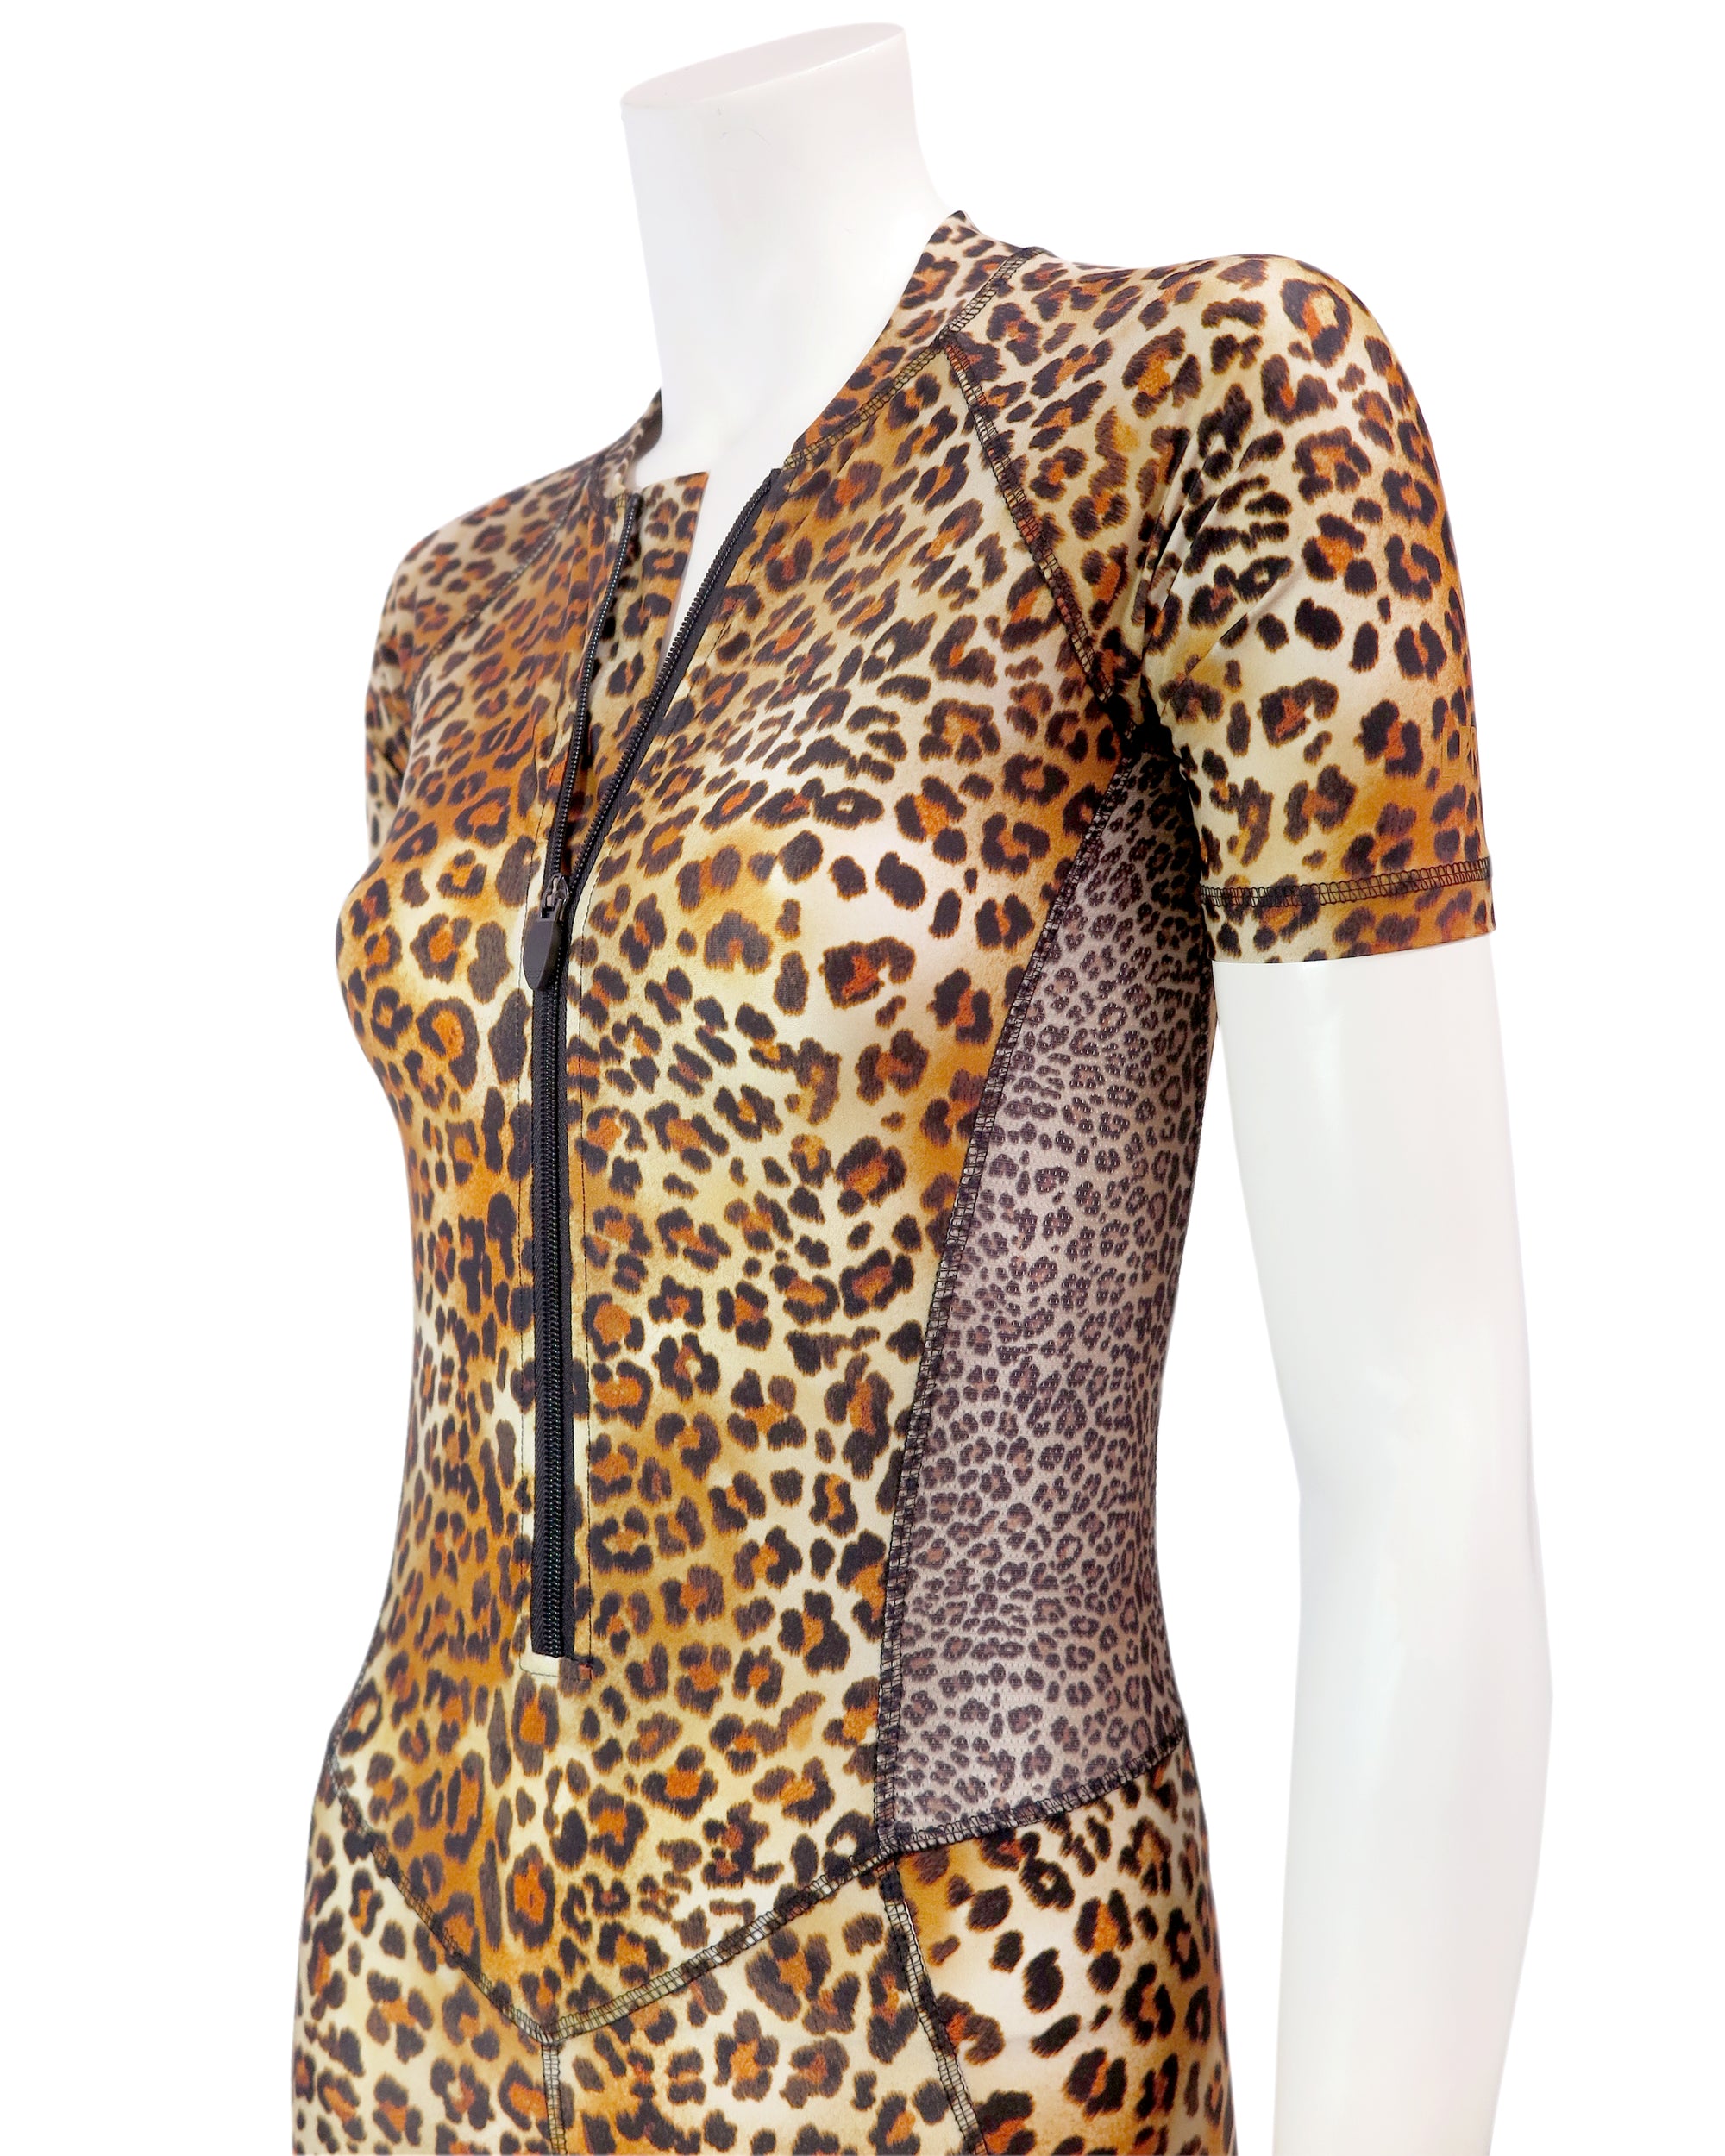 Skinsuit | Signature Leopard - sale